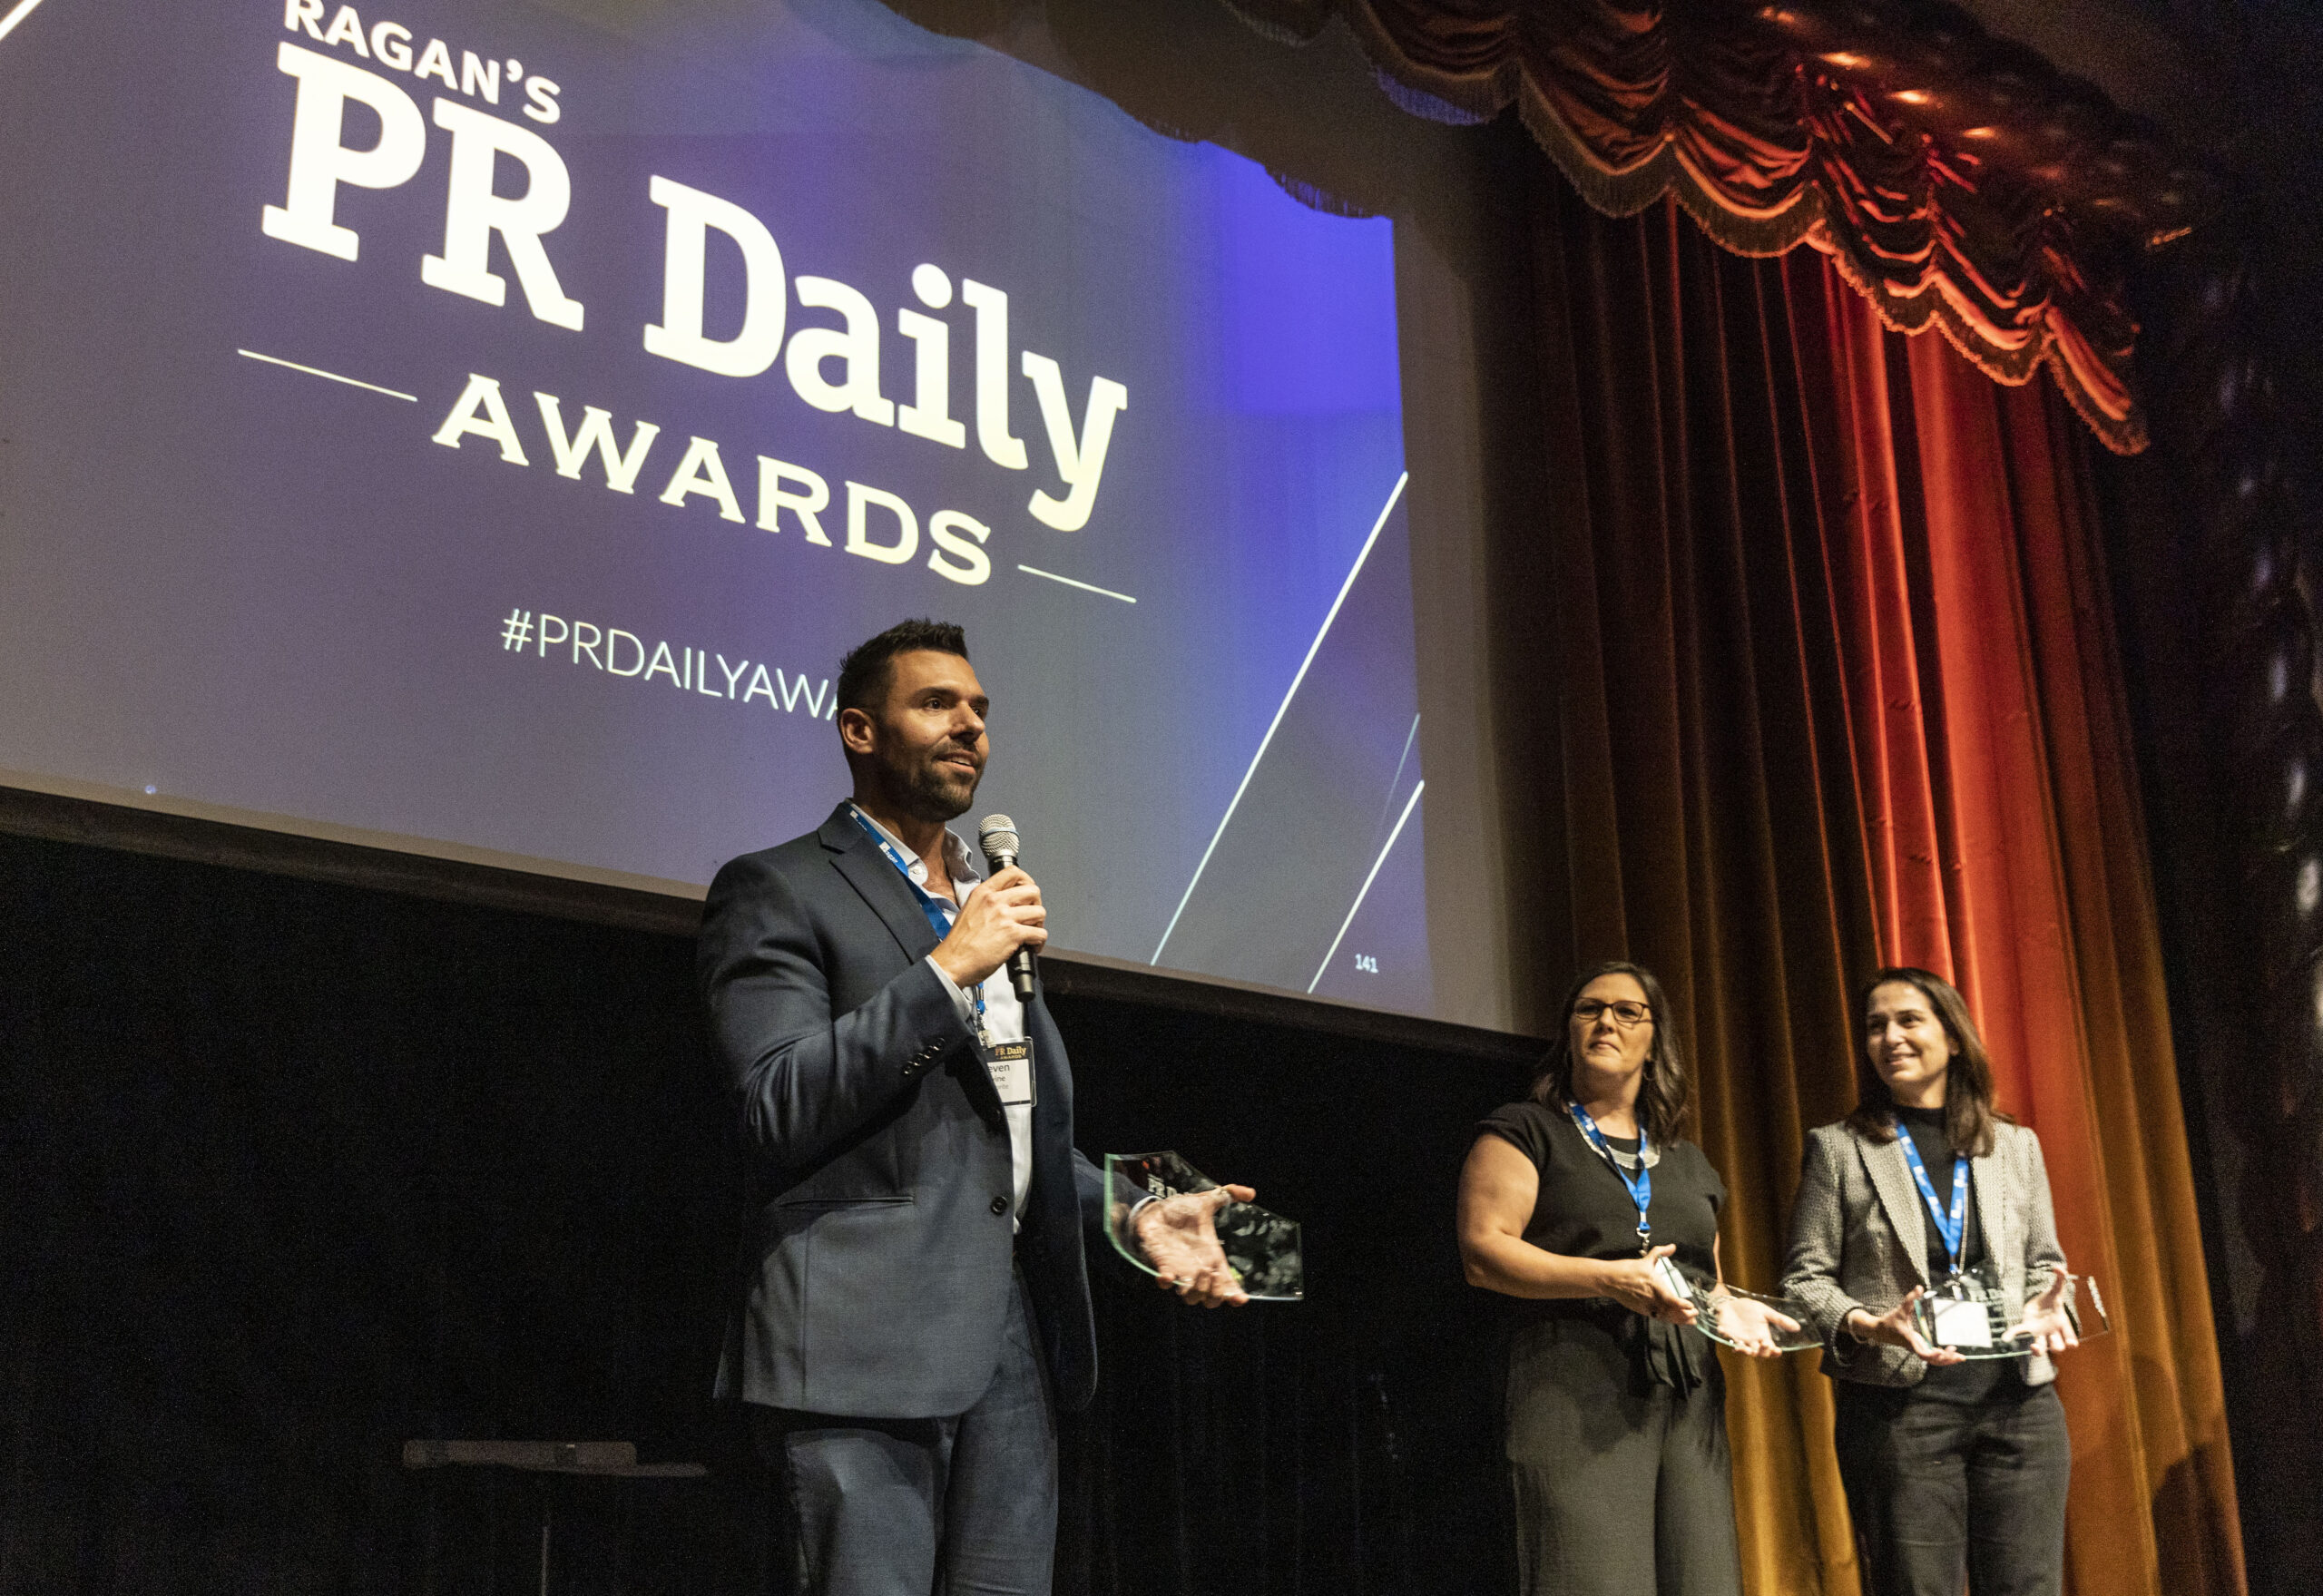 PR Daily Awards event acceptance speech